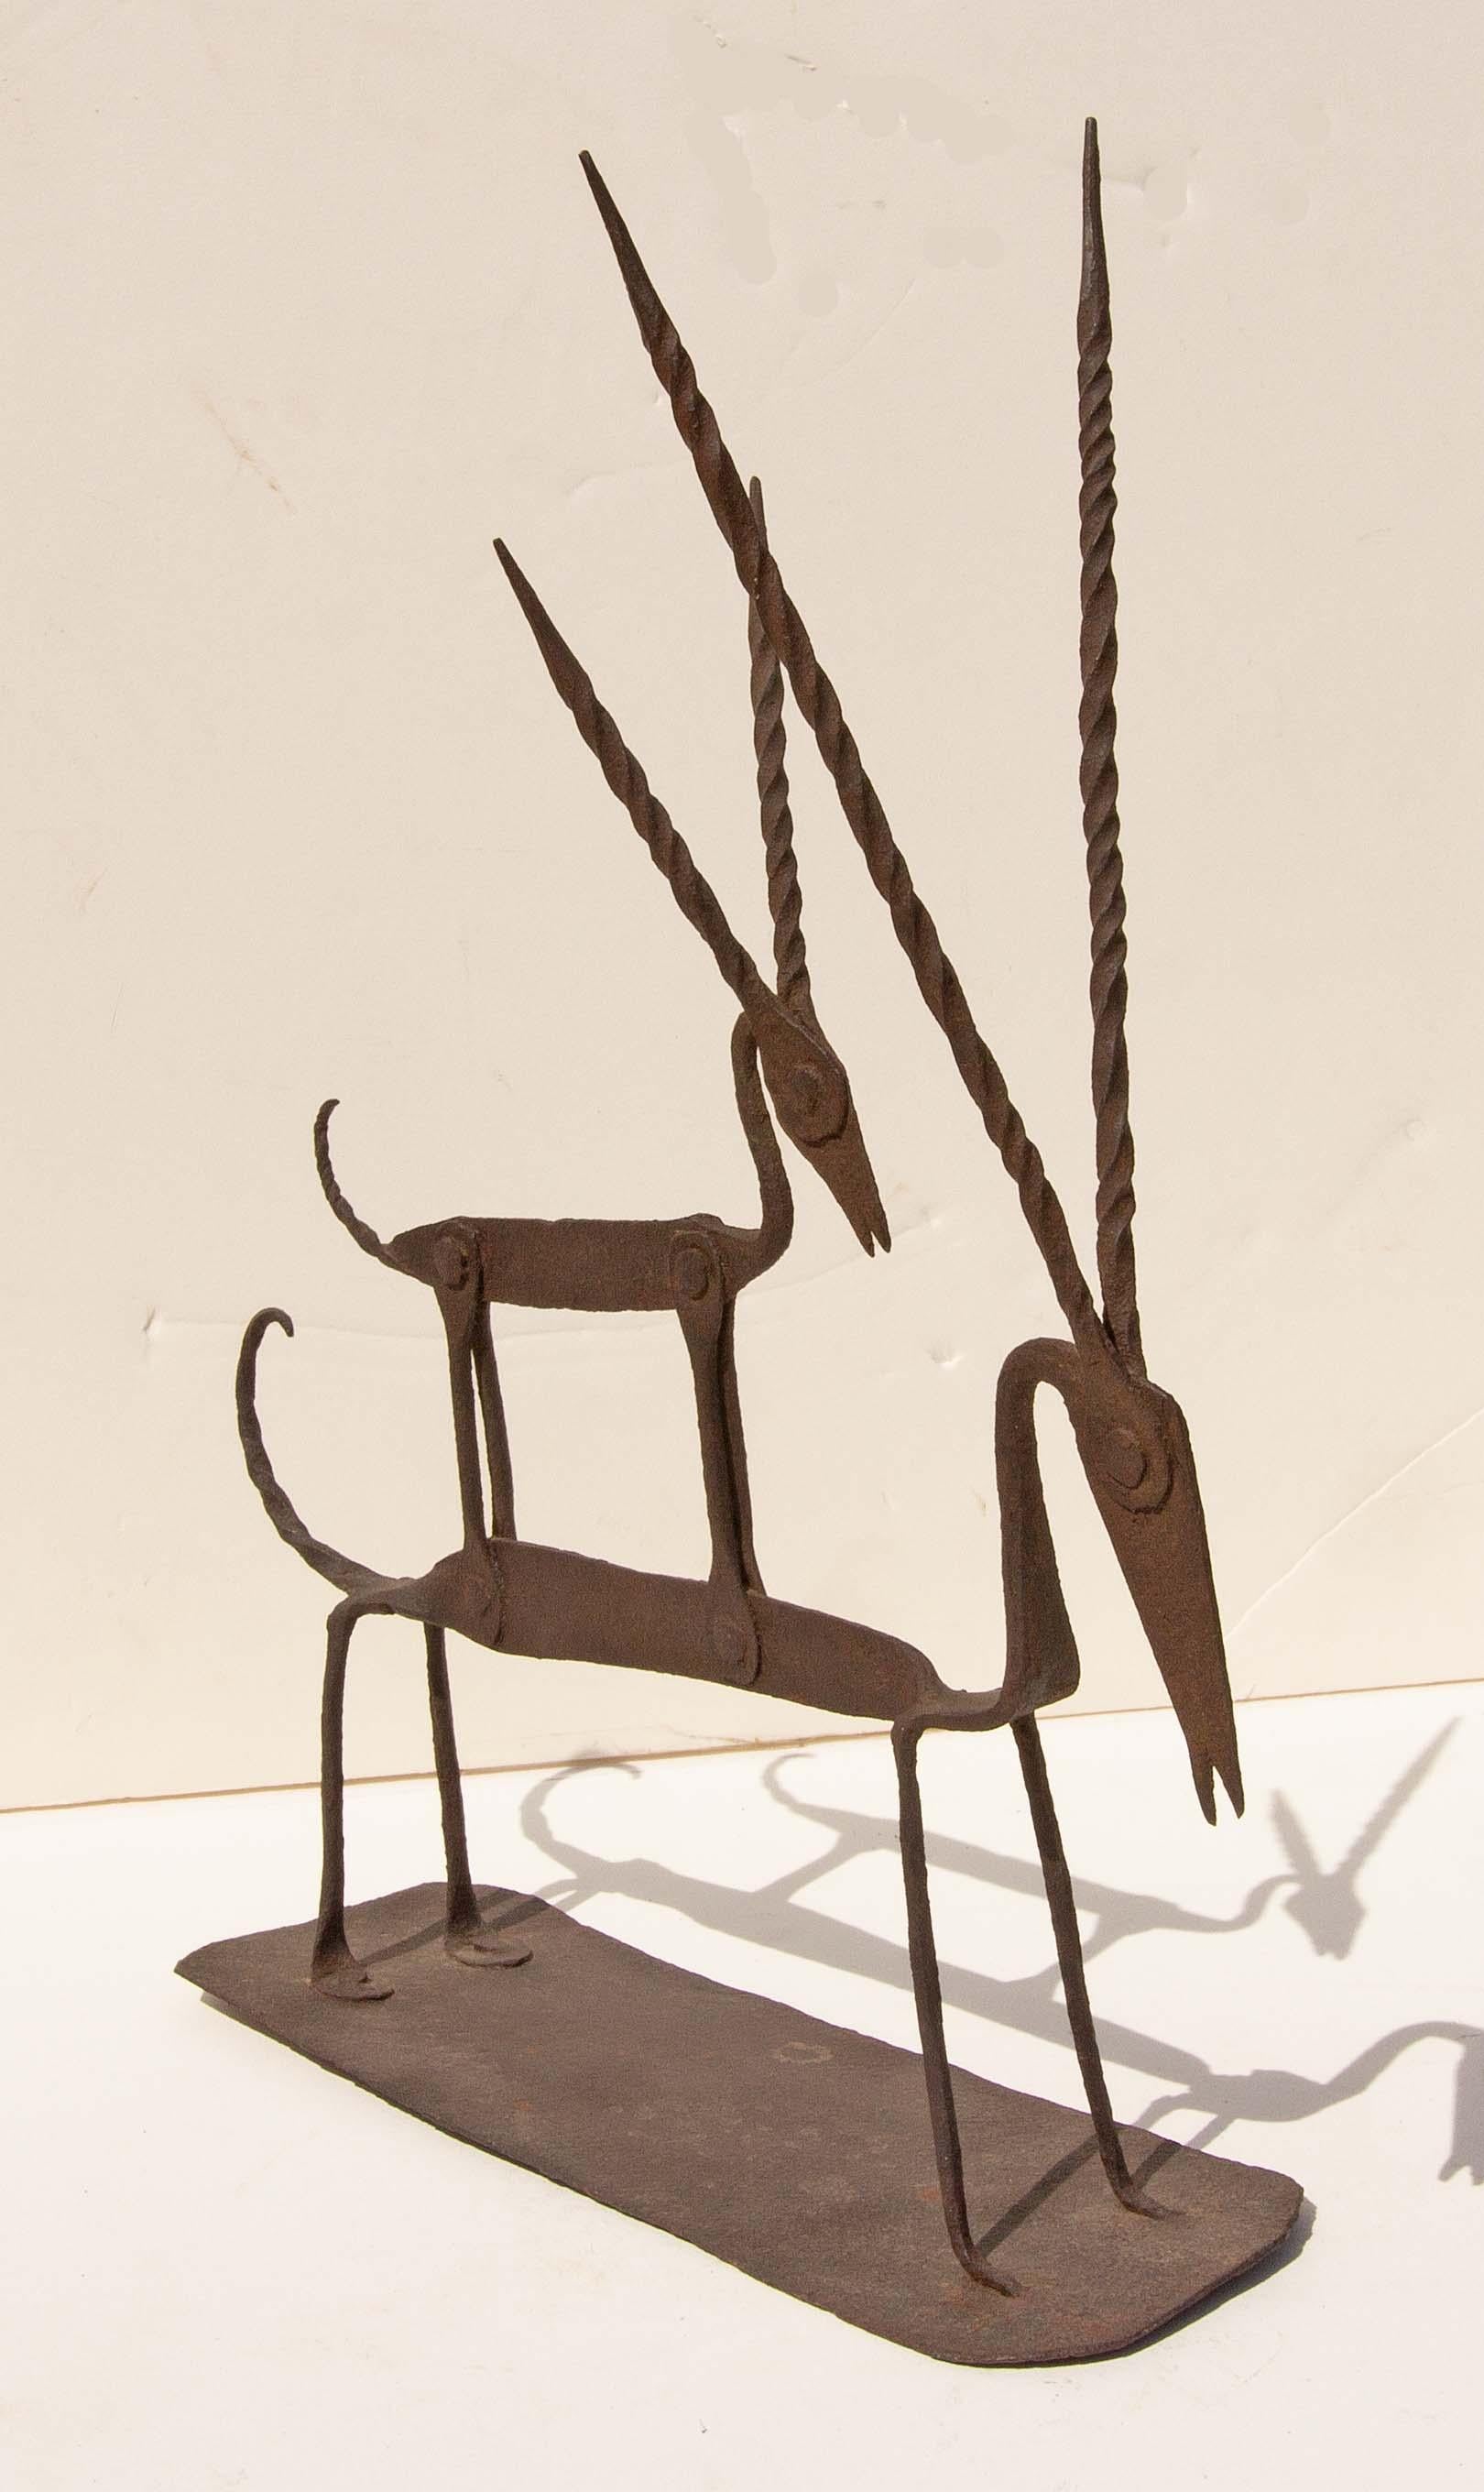 African style iron gazelle sculpture, mid-20th century. Measures: 13 3/4